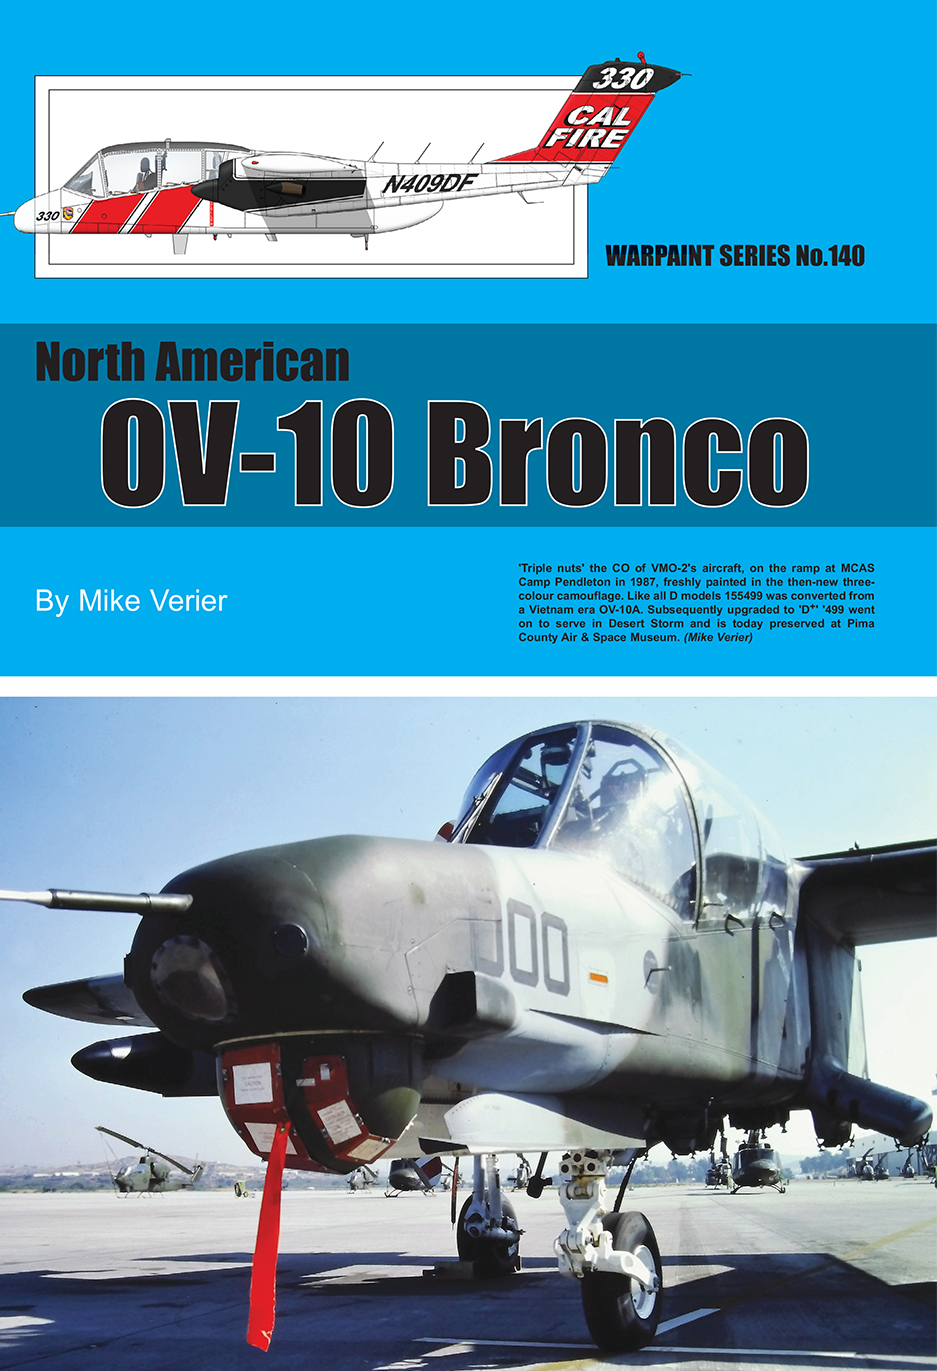 Guideline Publications Ltd Warpaint 140 North American OV-10 Bronco By Mike Verier 